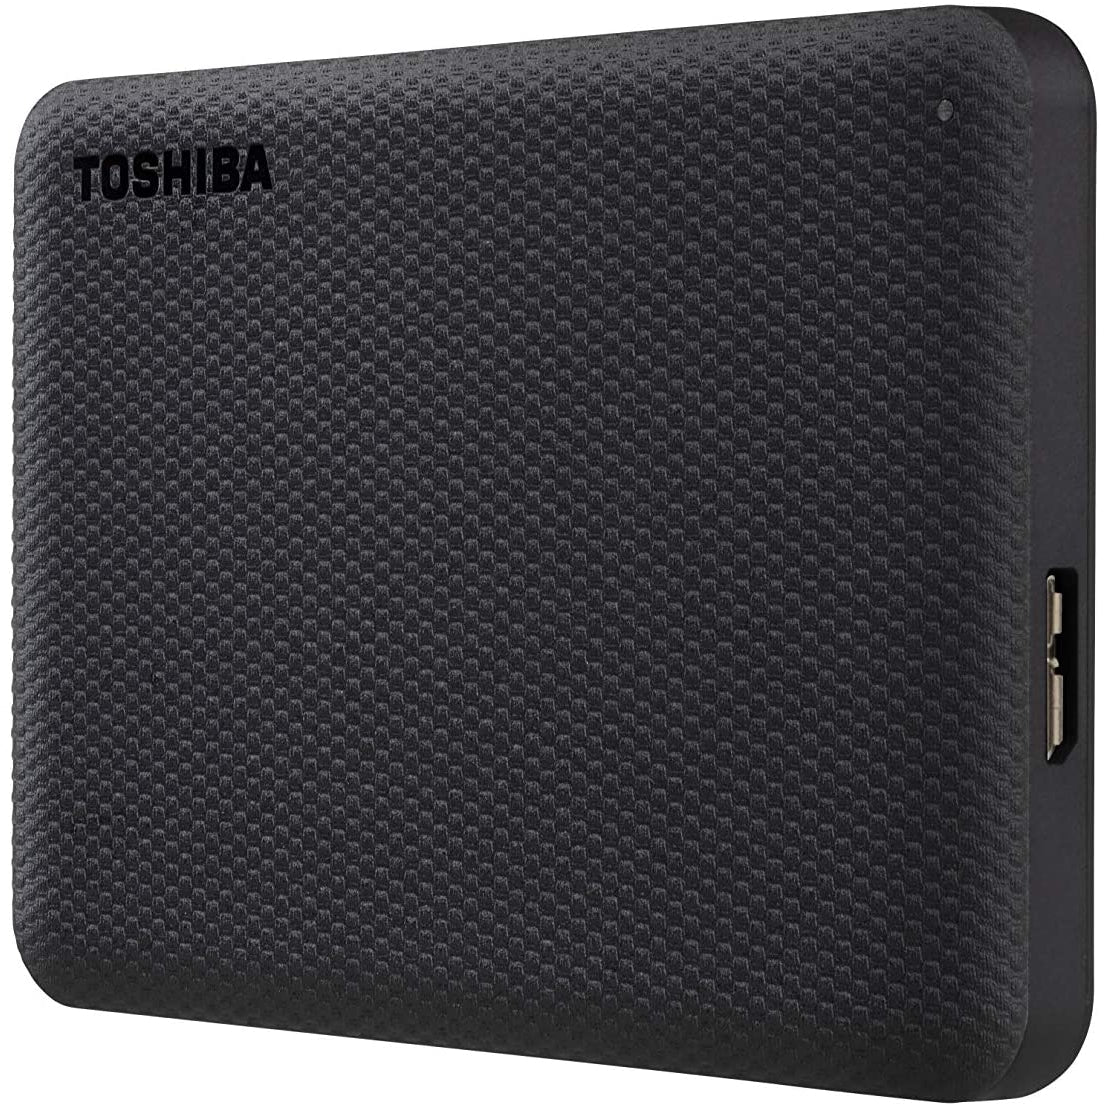 Toshiba Canvio Advance 1TB Portable External Hard Drive USB 3.0, Black - Refurbished Pristine